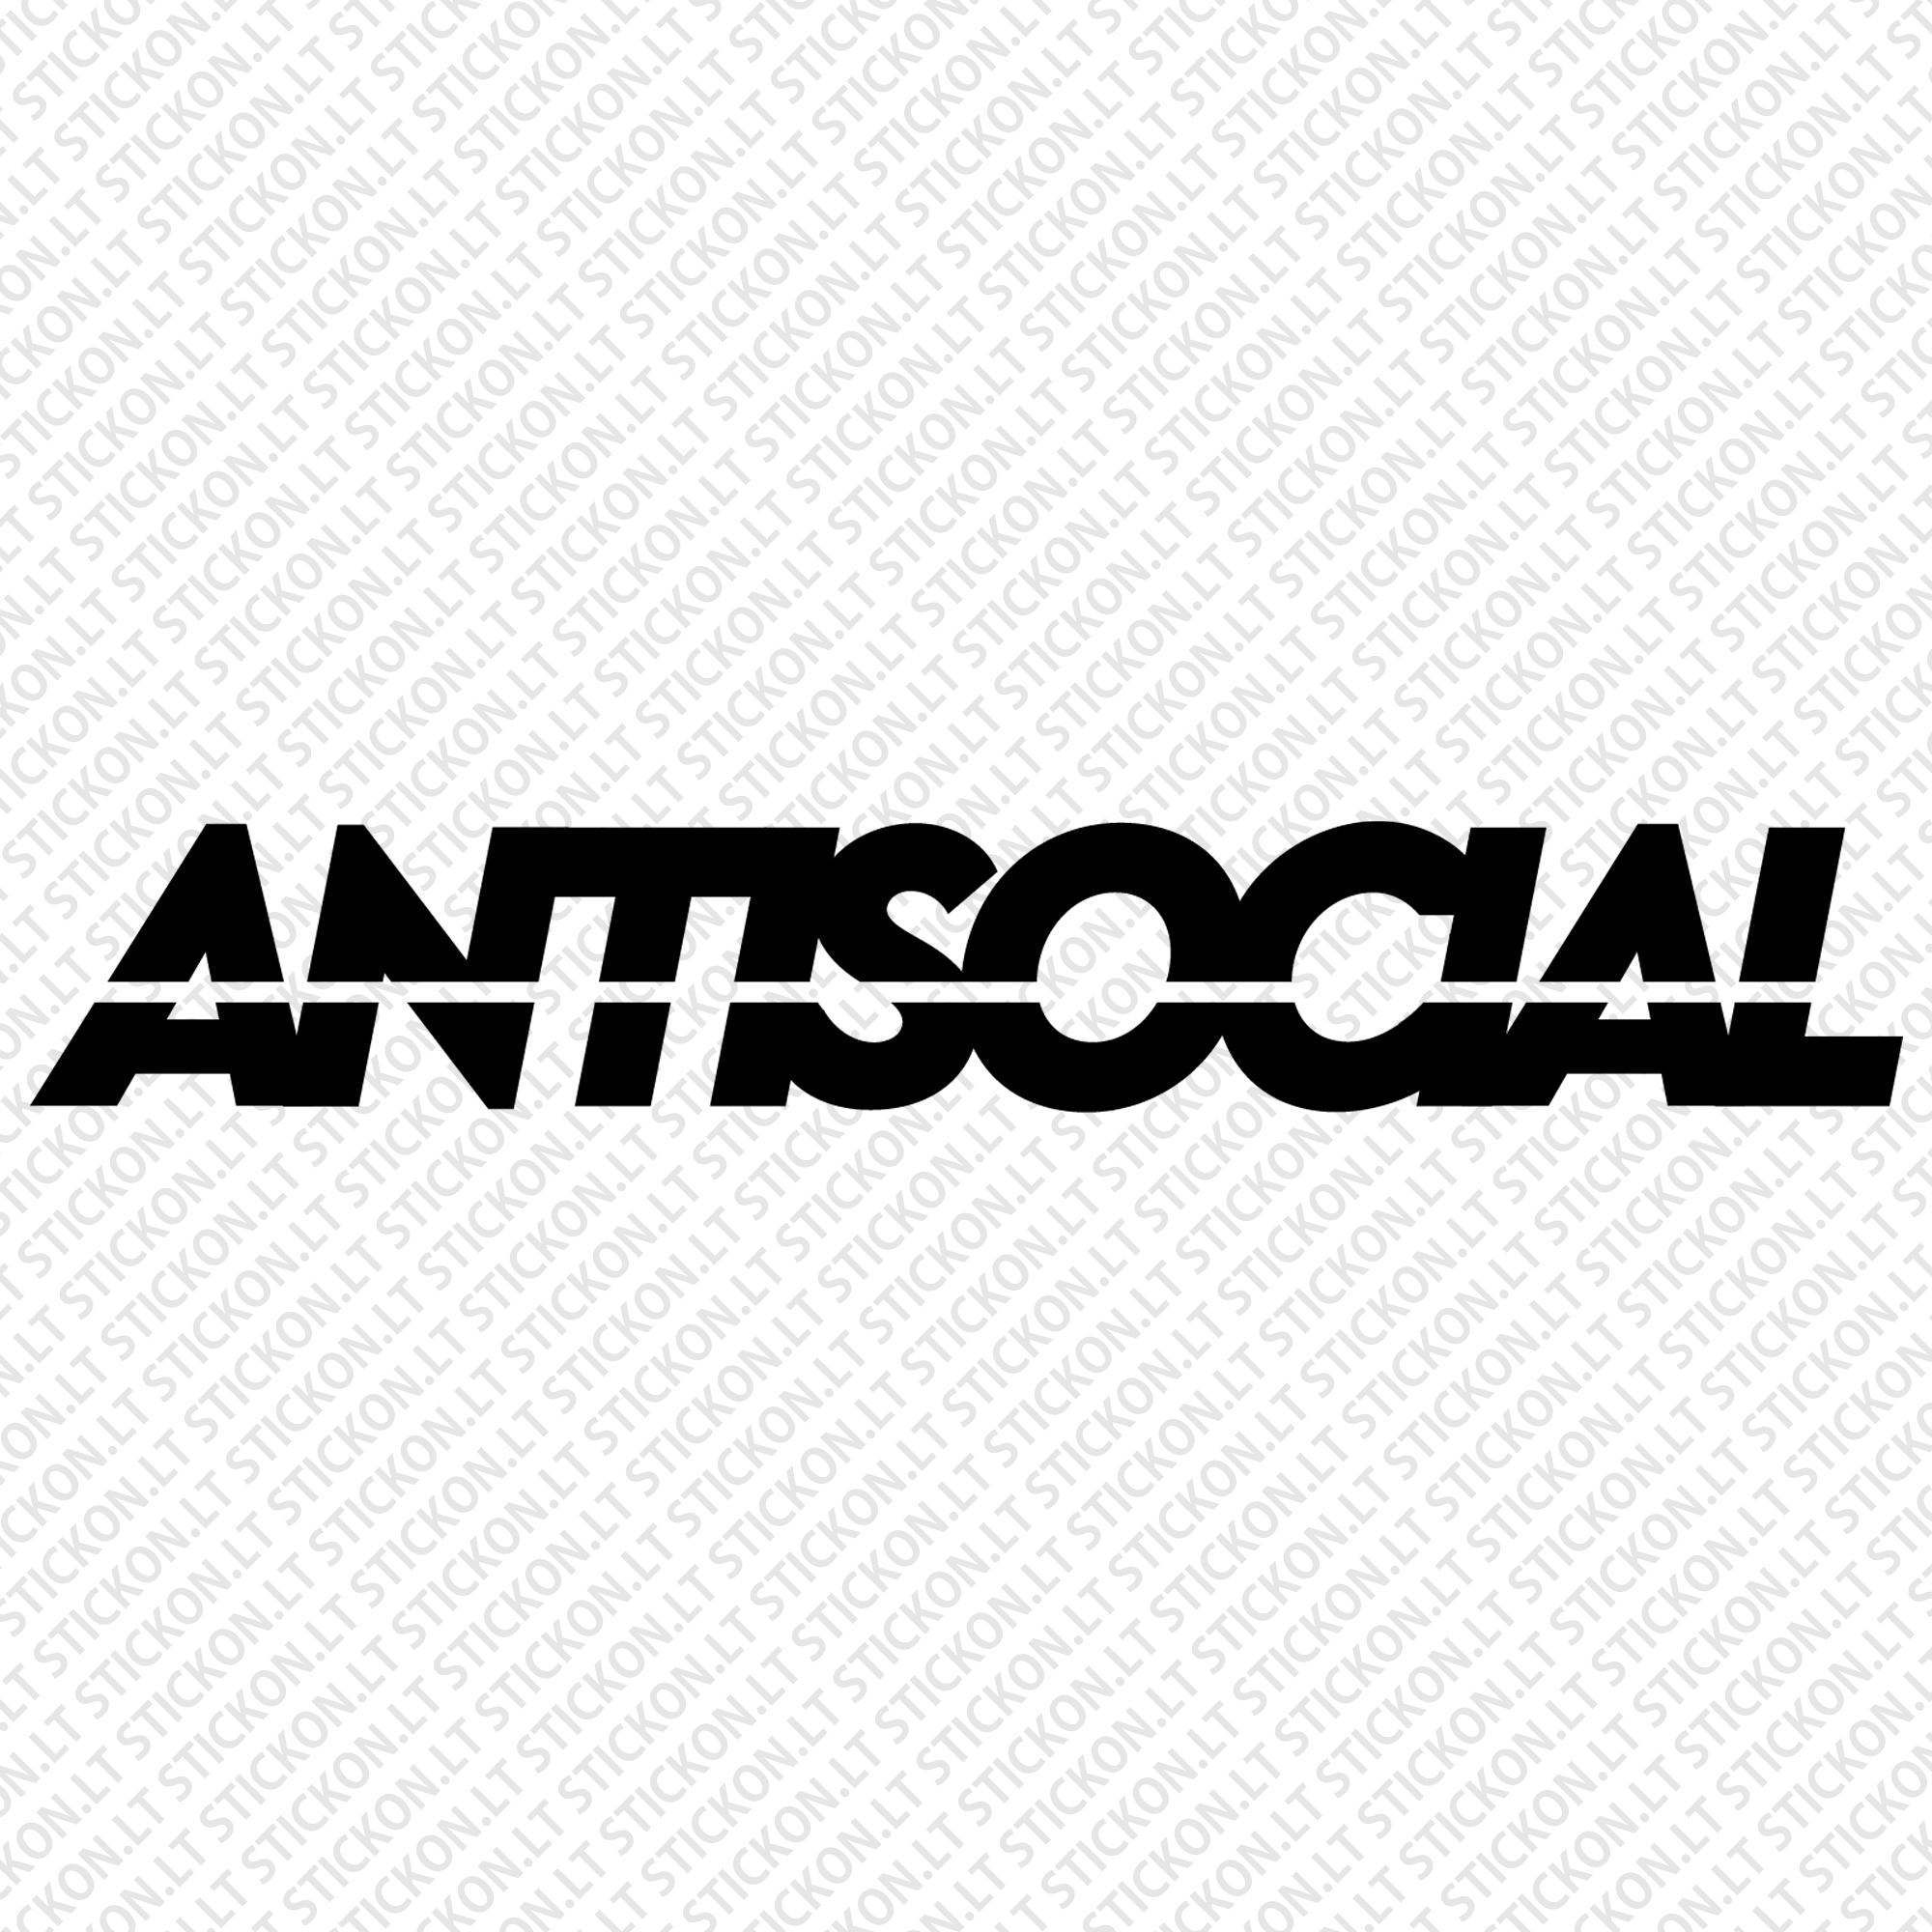 "Antisocial"